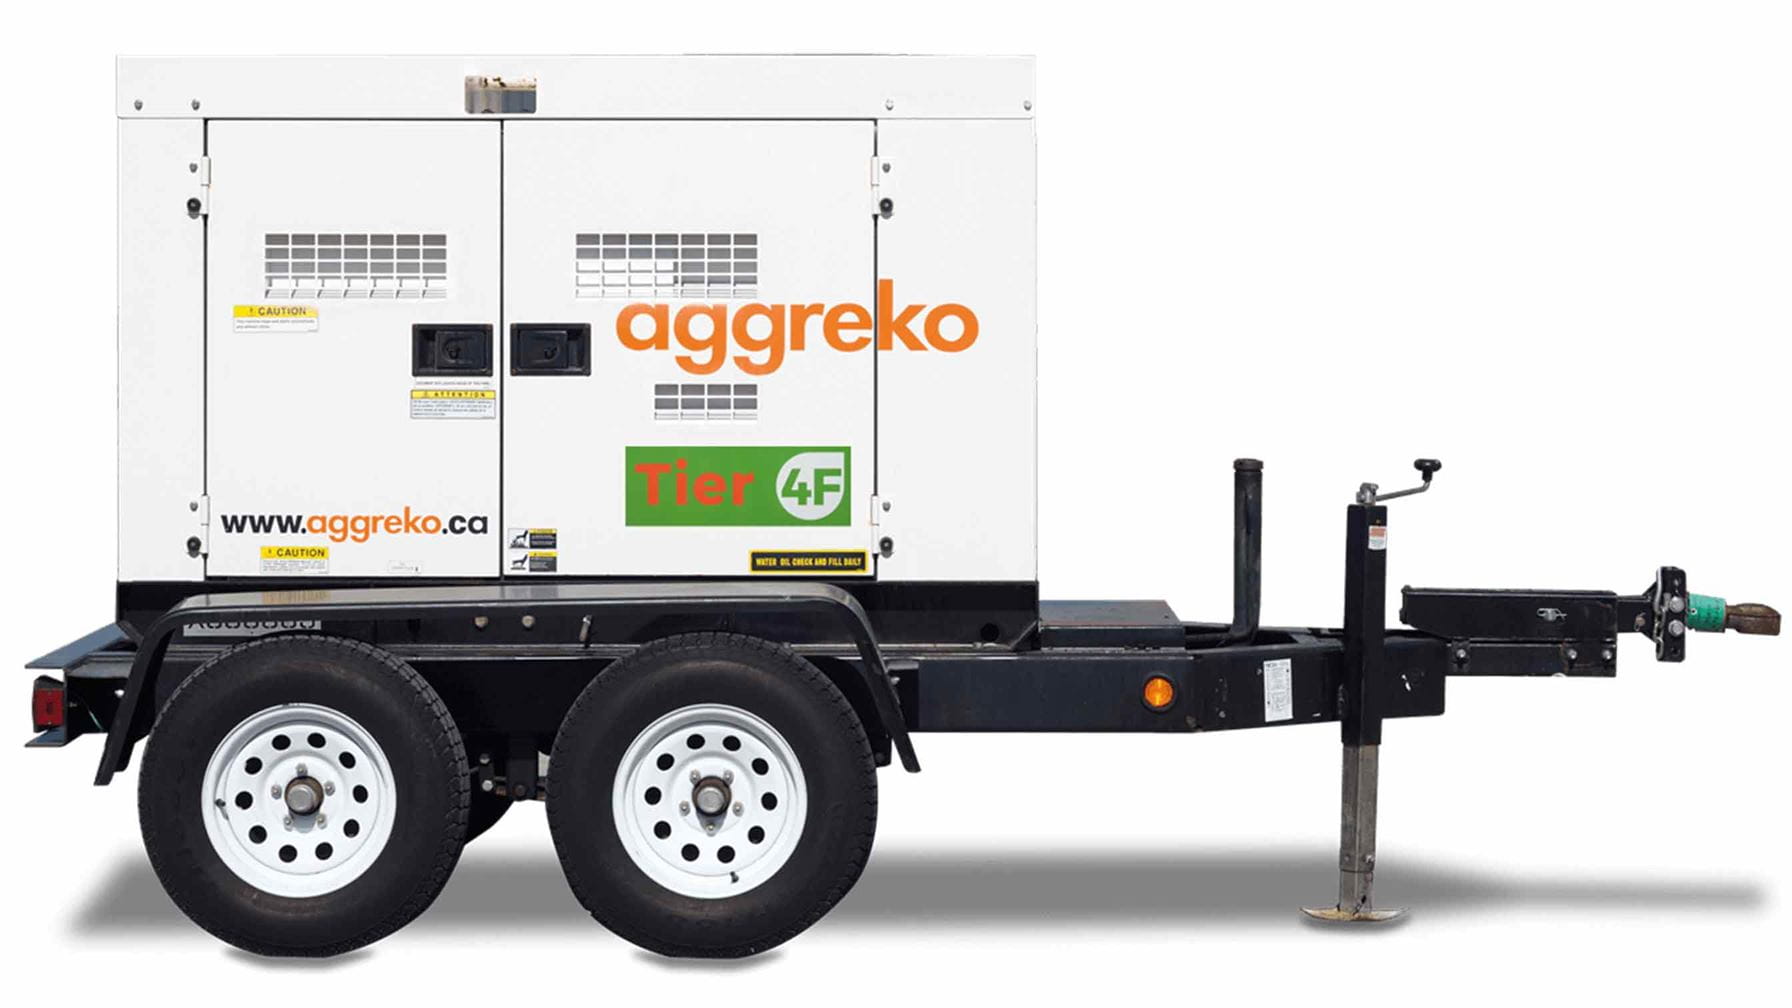 40 kW Tier 4F diesel generator